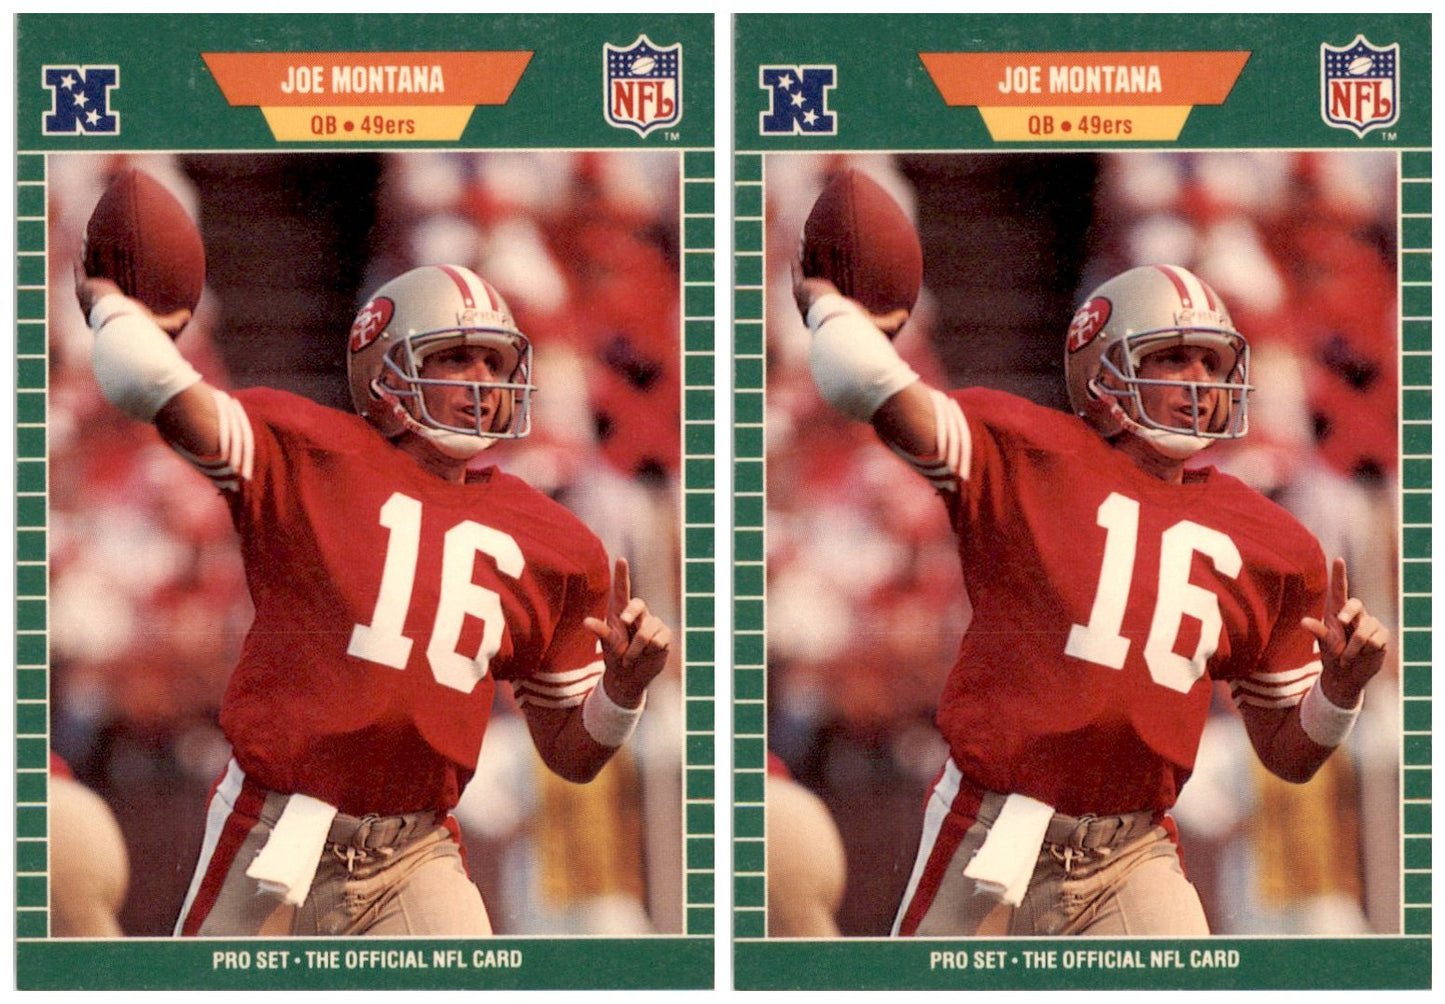 (2) 1989 Pro Set #381 Joe Montana San Francisco 49ers Card Lot